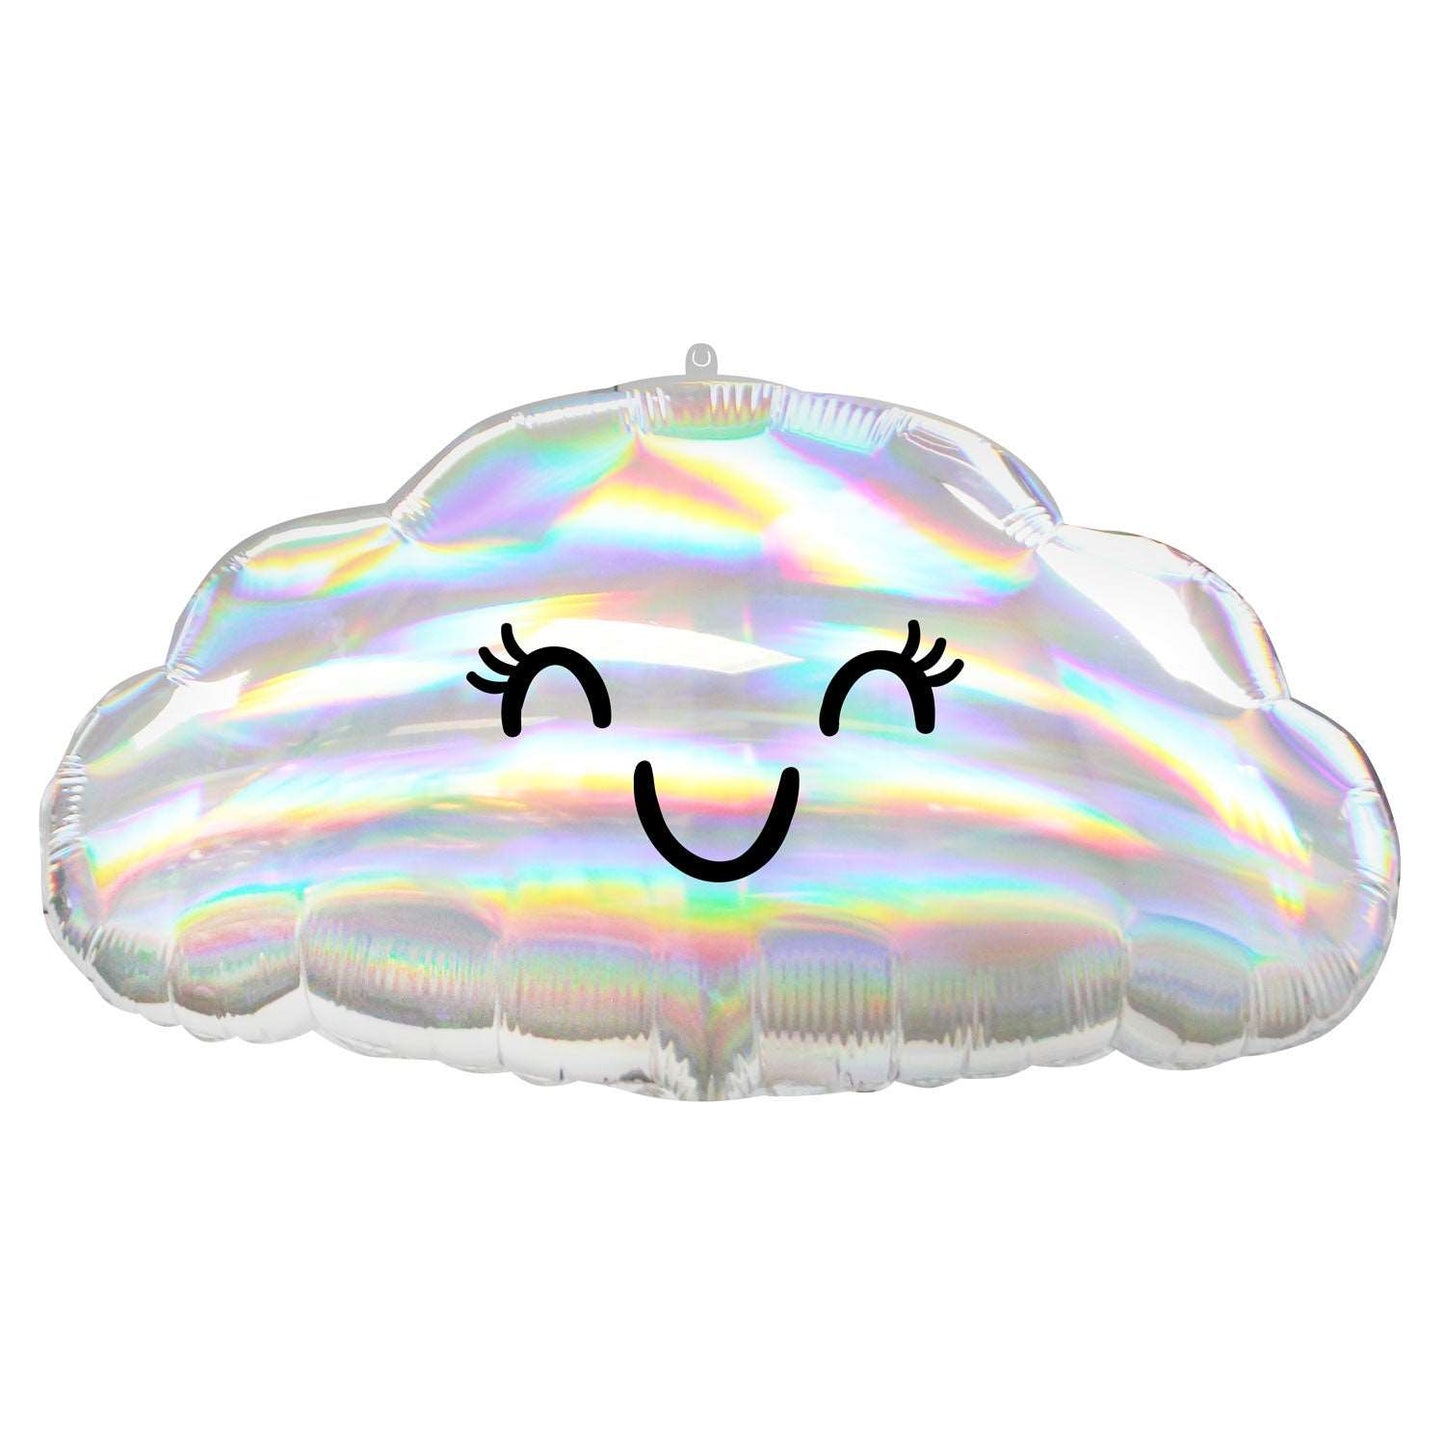 Puffy Cloud Shape Balloon